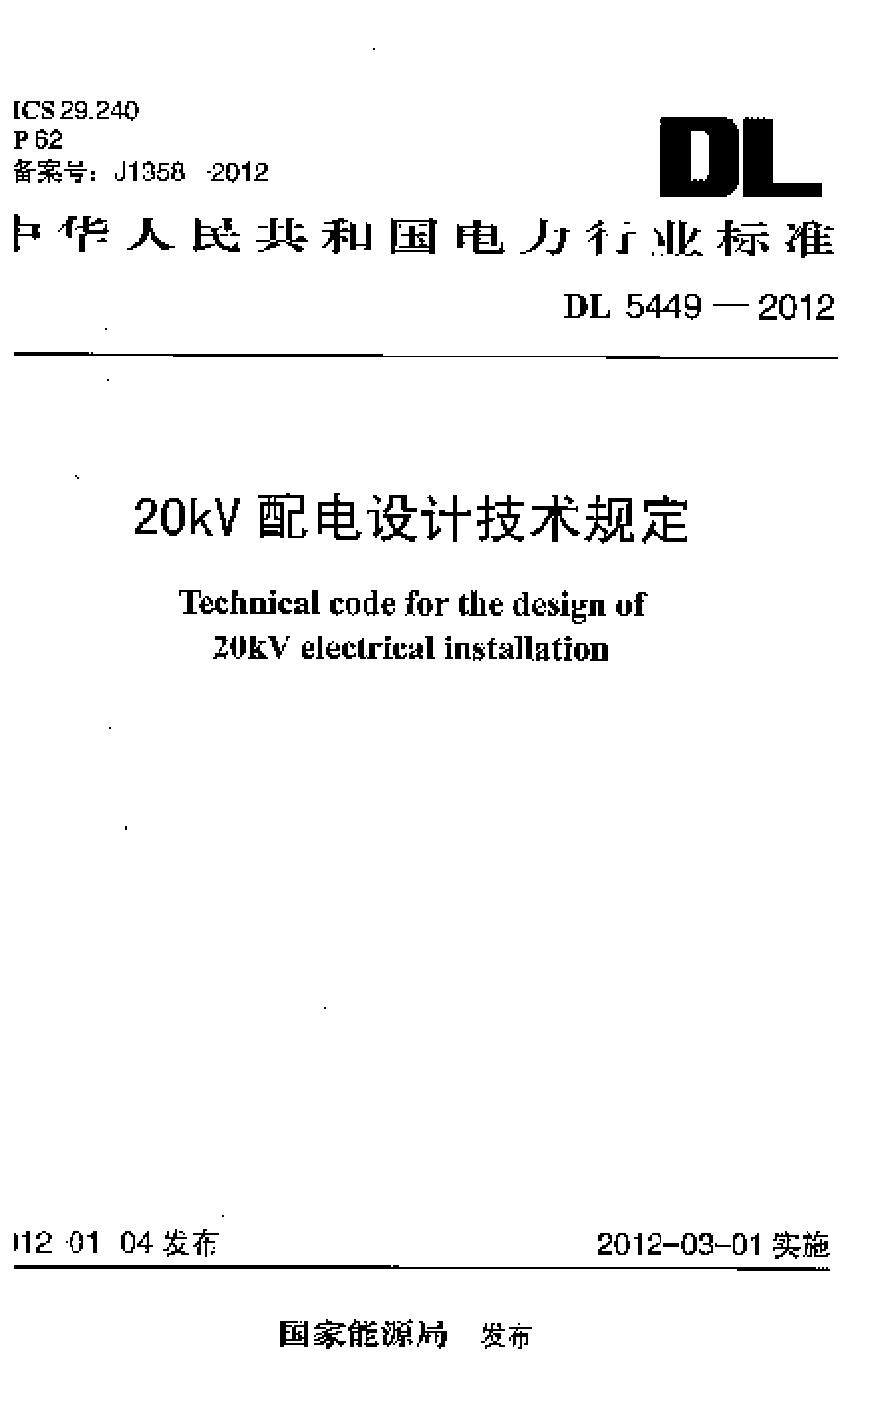 DL5449-2012 20kV配电设计技术规定